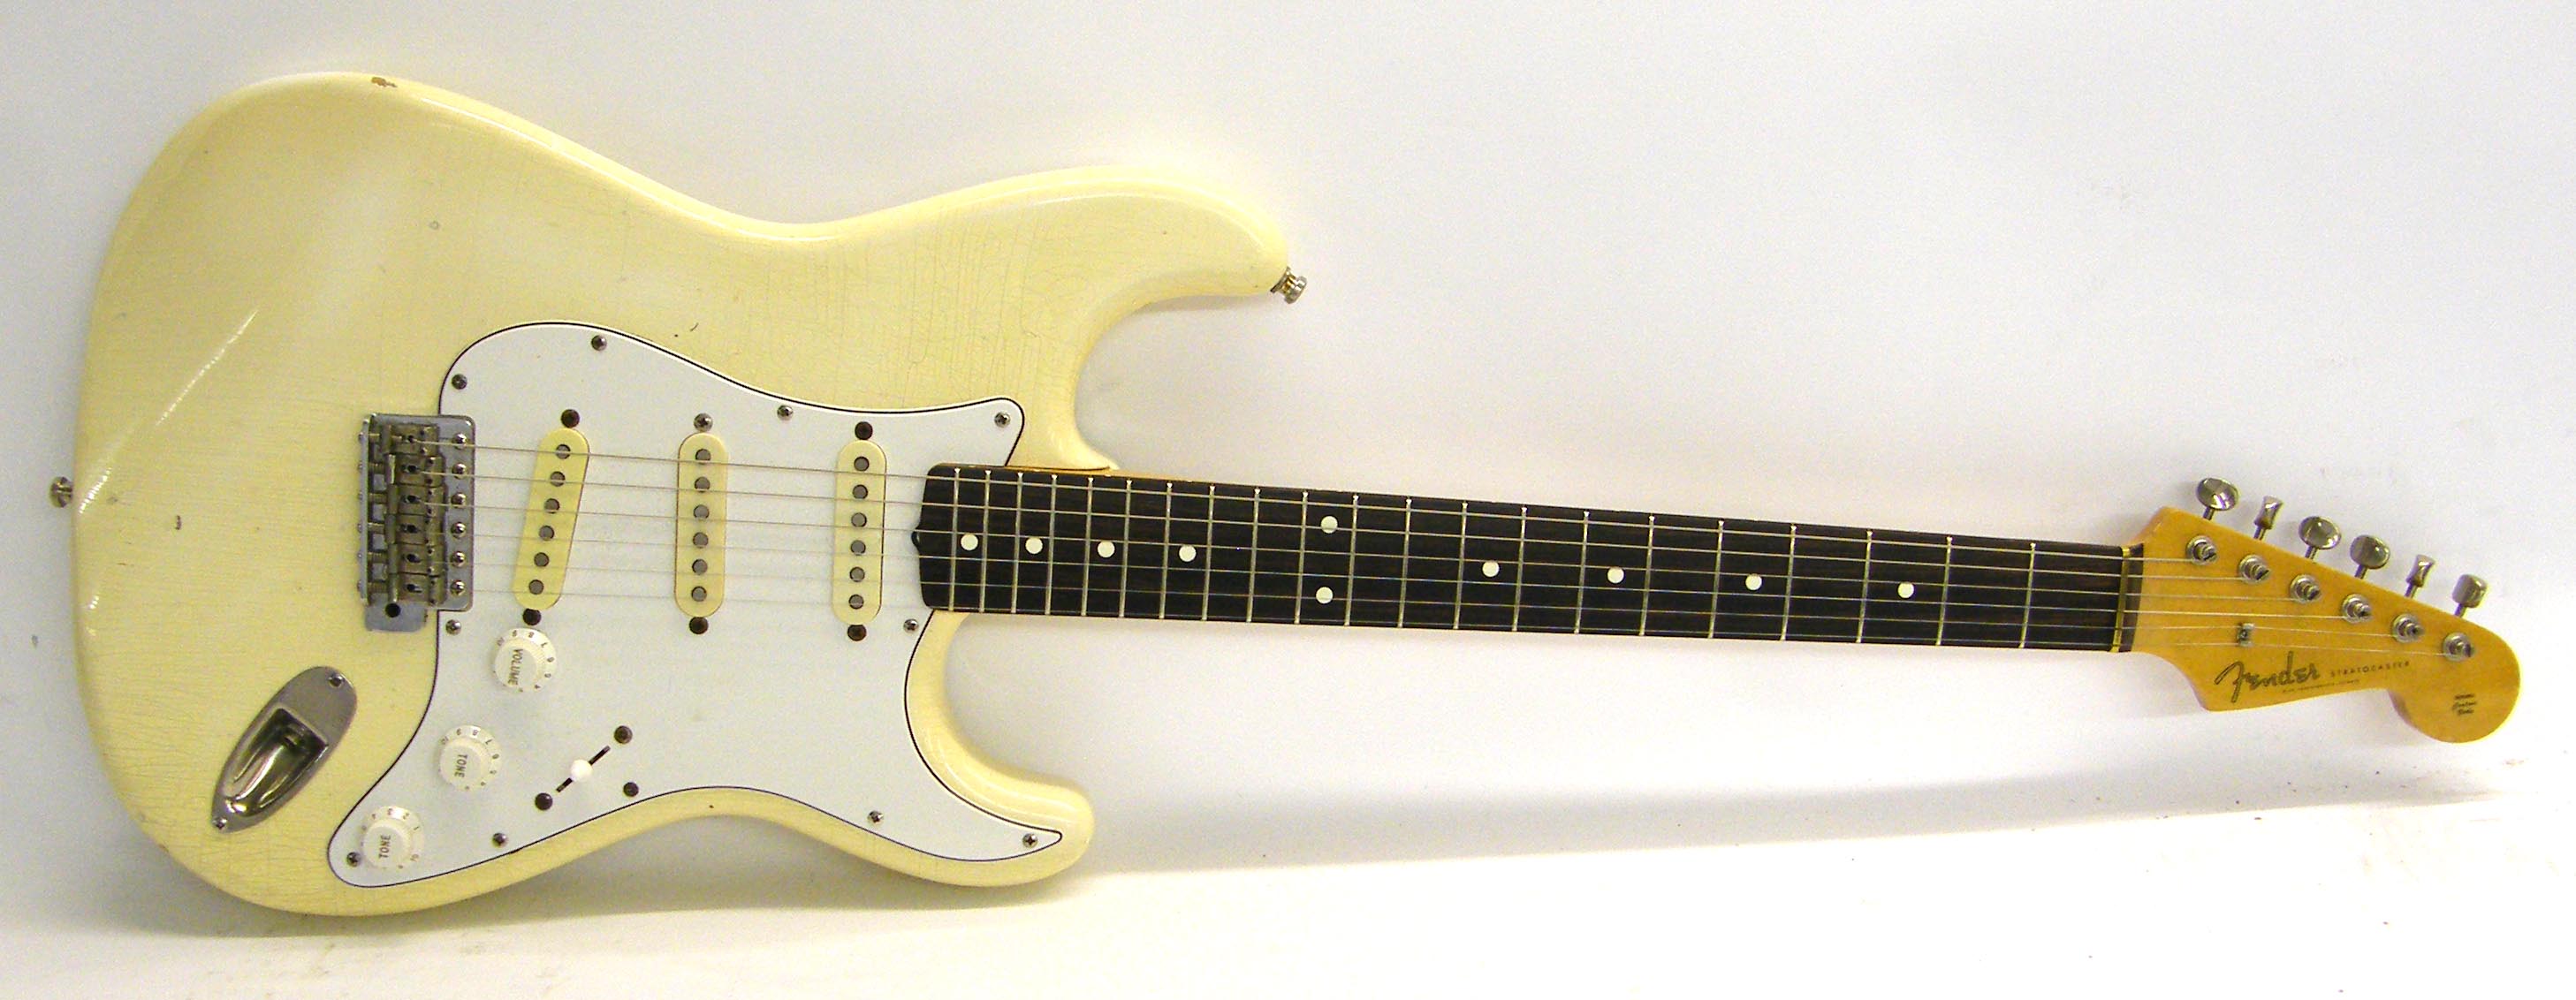 1983 Fender JV ST62-65 Stratocaster electric guitar, made in Japan, ser. no. JV56470, white finish